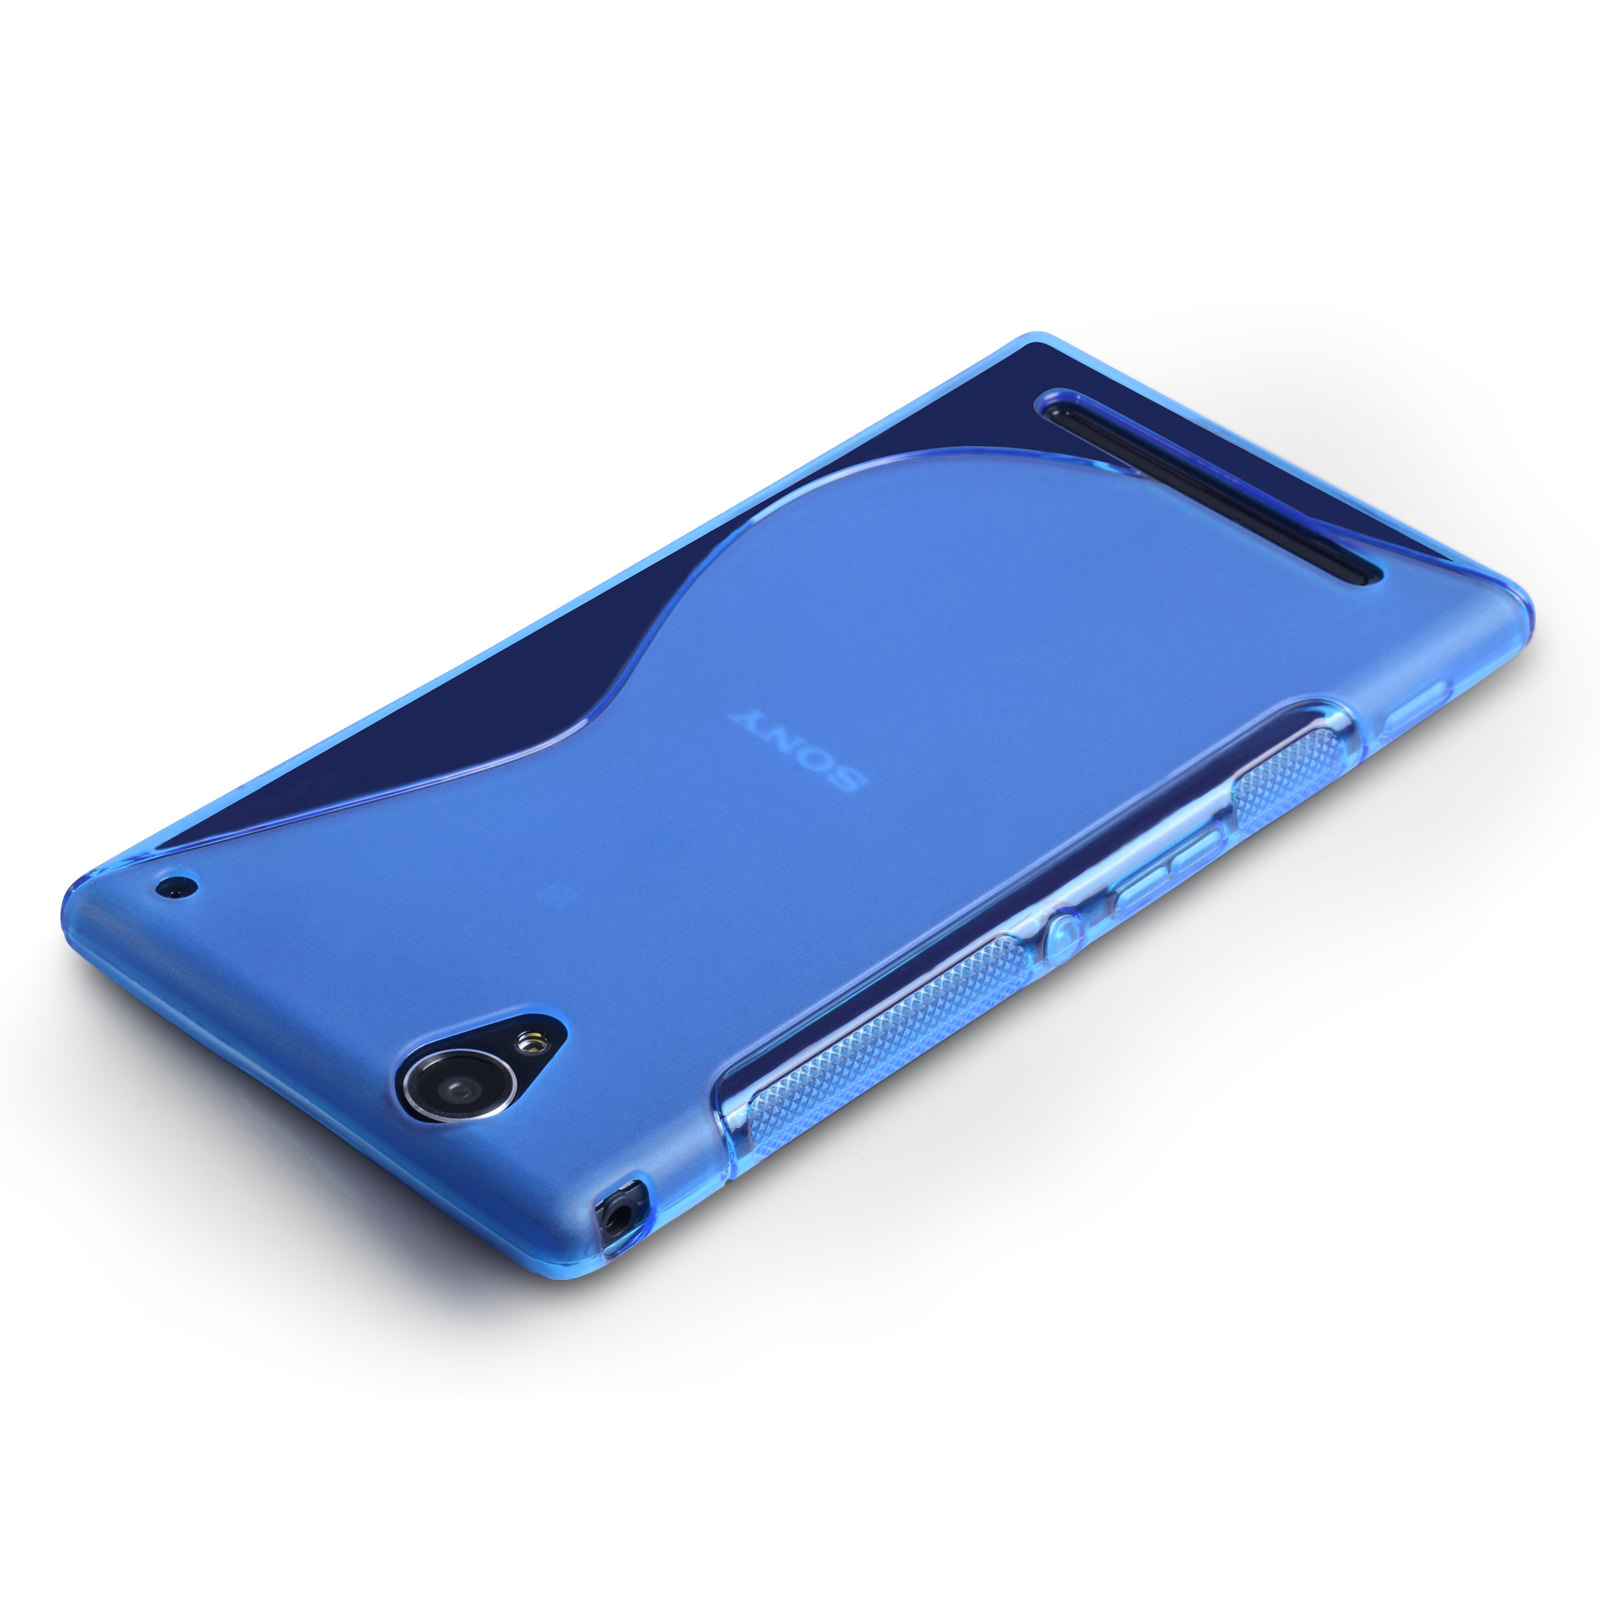 Caseflex Sony Xperia T2 Ultra Silicone Gel S-Line Case - Blue